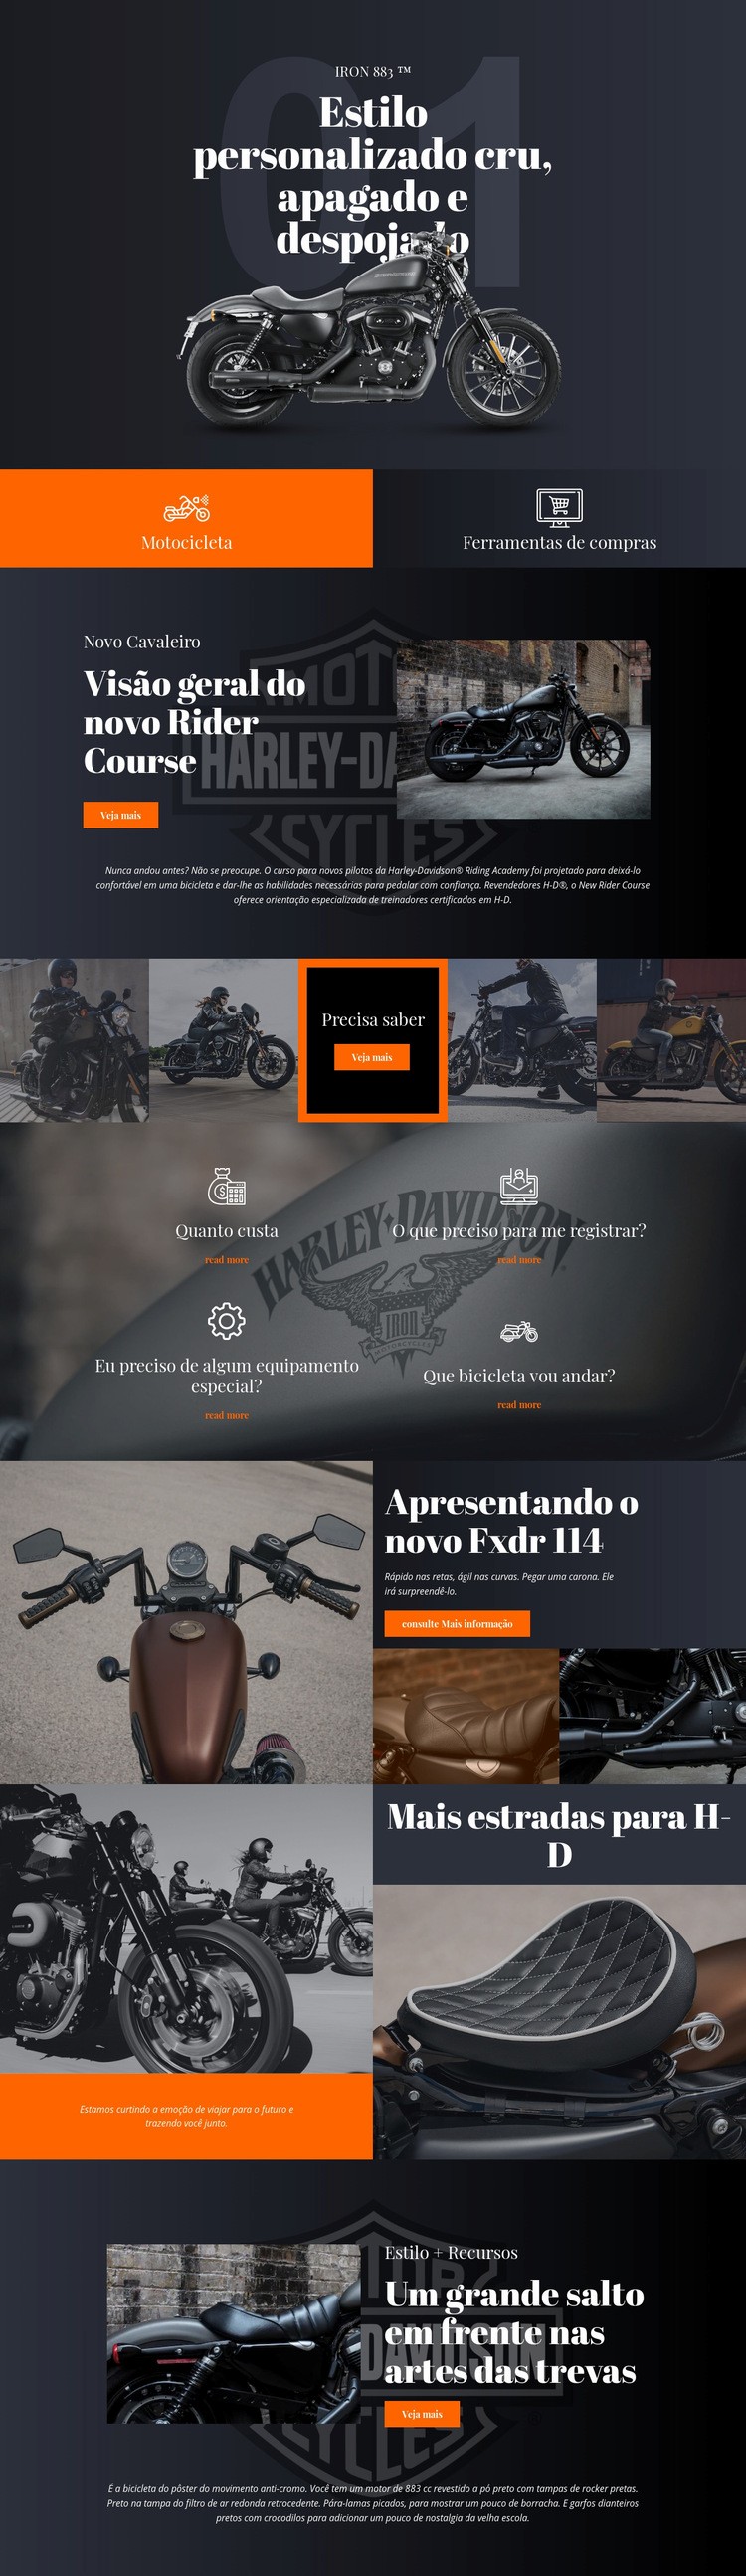 Harley Davidson Design do site